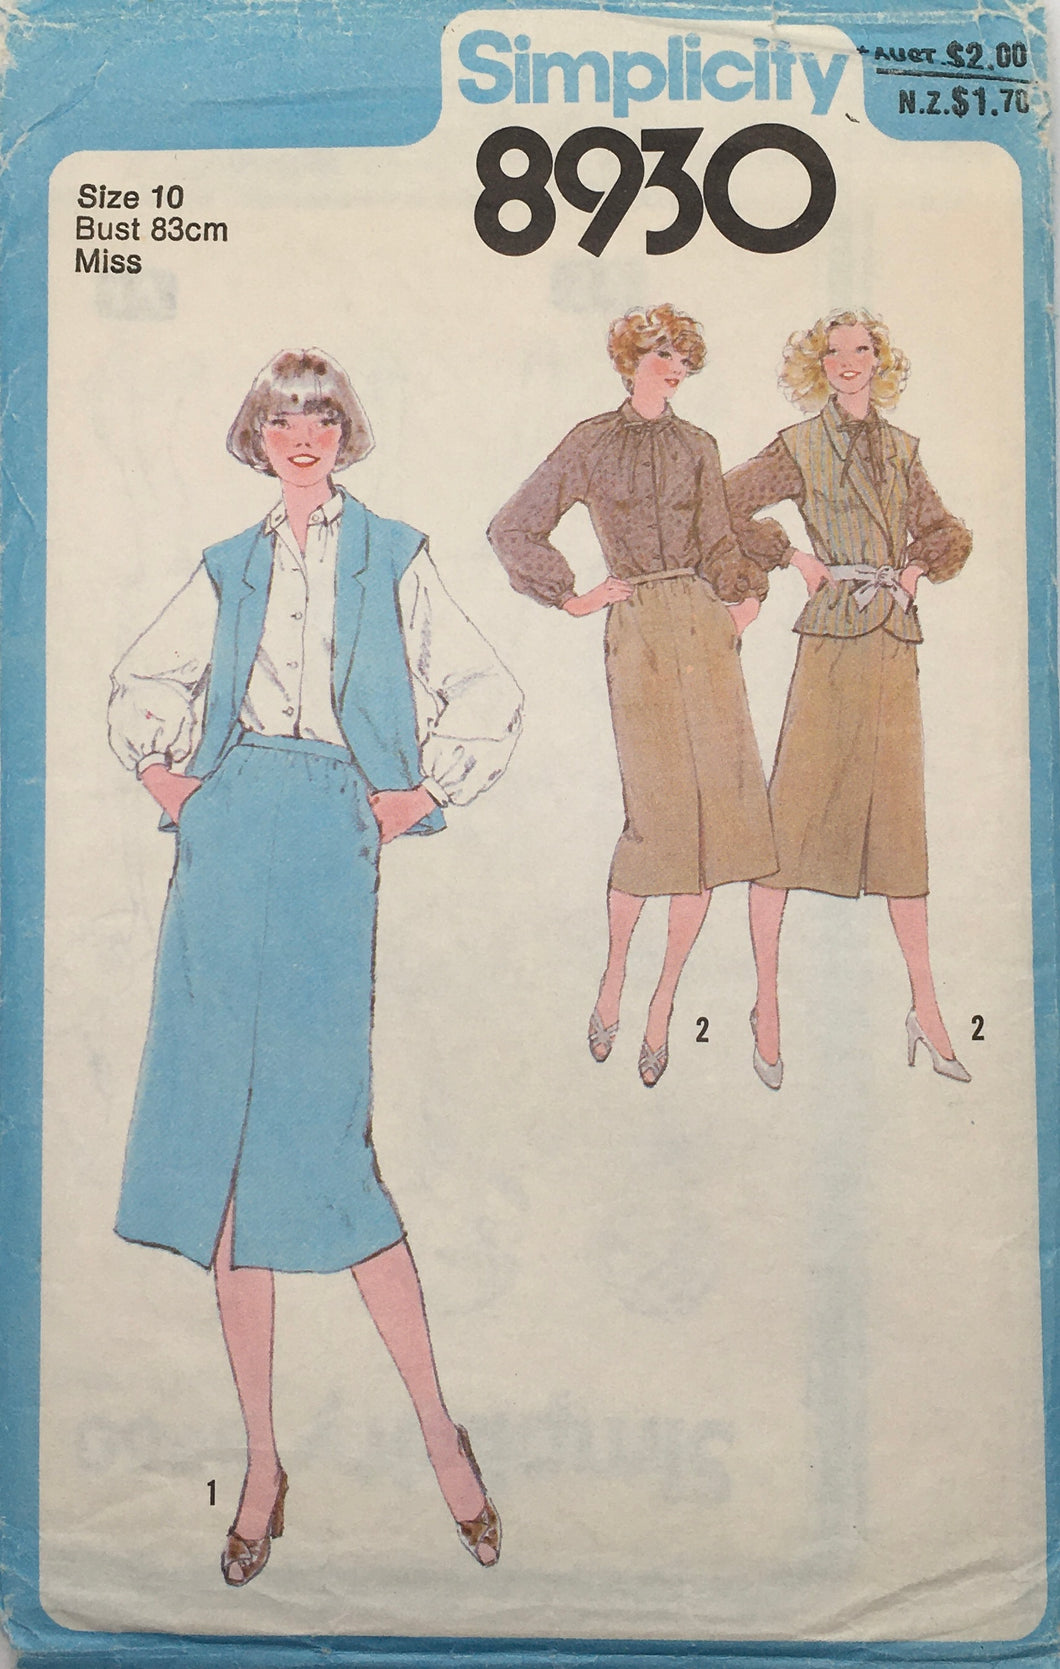 1979 Vintage Sewing Pattern: Simplicity 8930